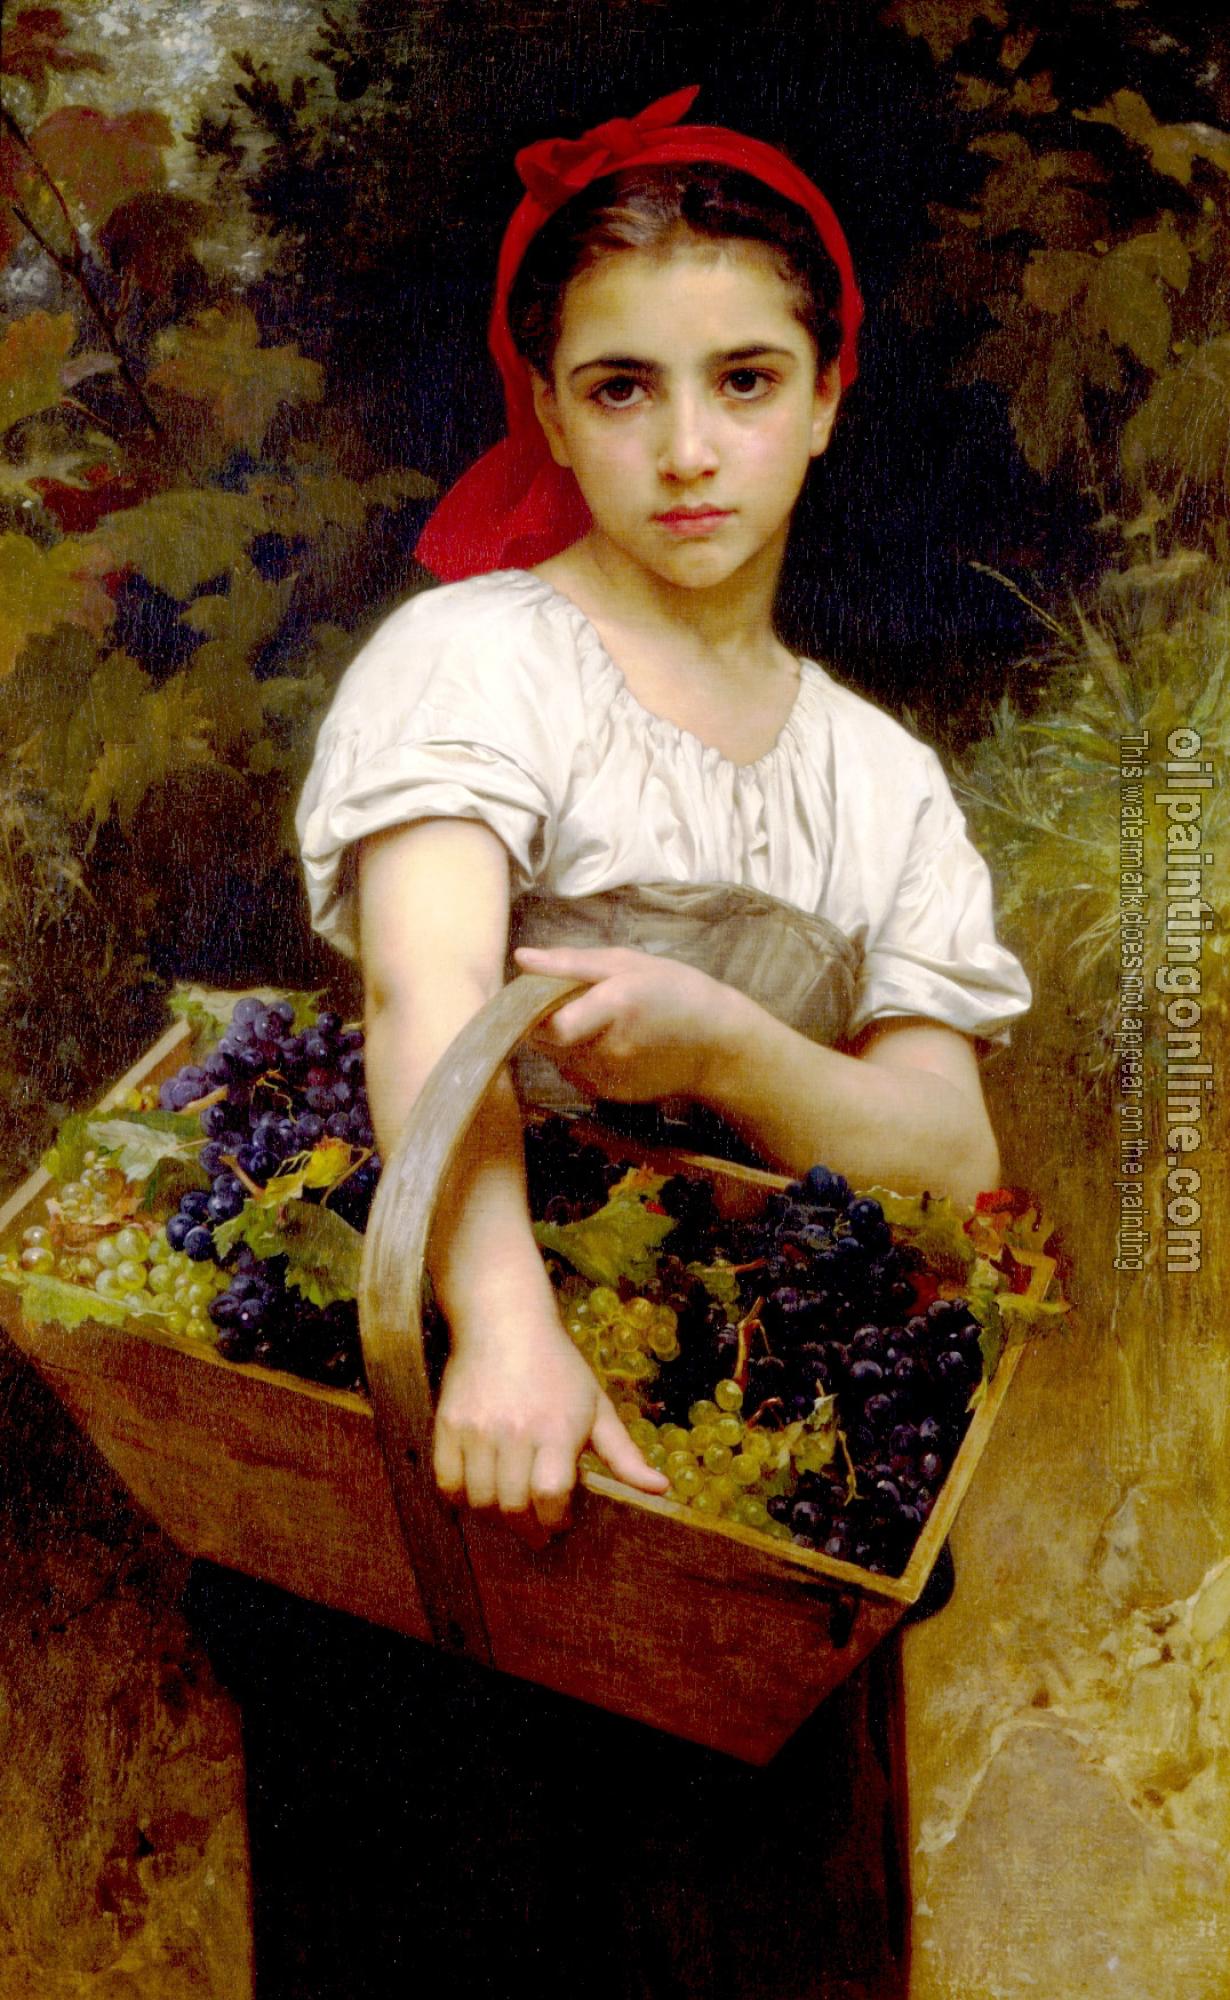 Bouguereau, William-Adolphe - The Grape Picker